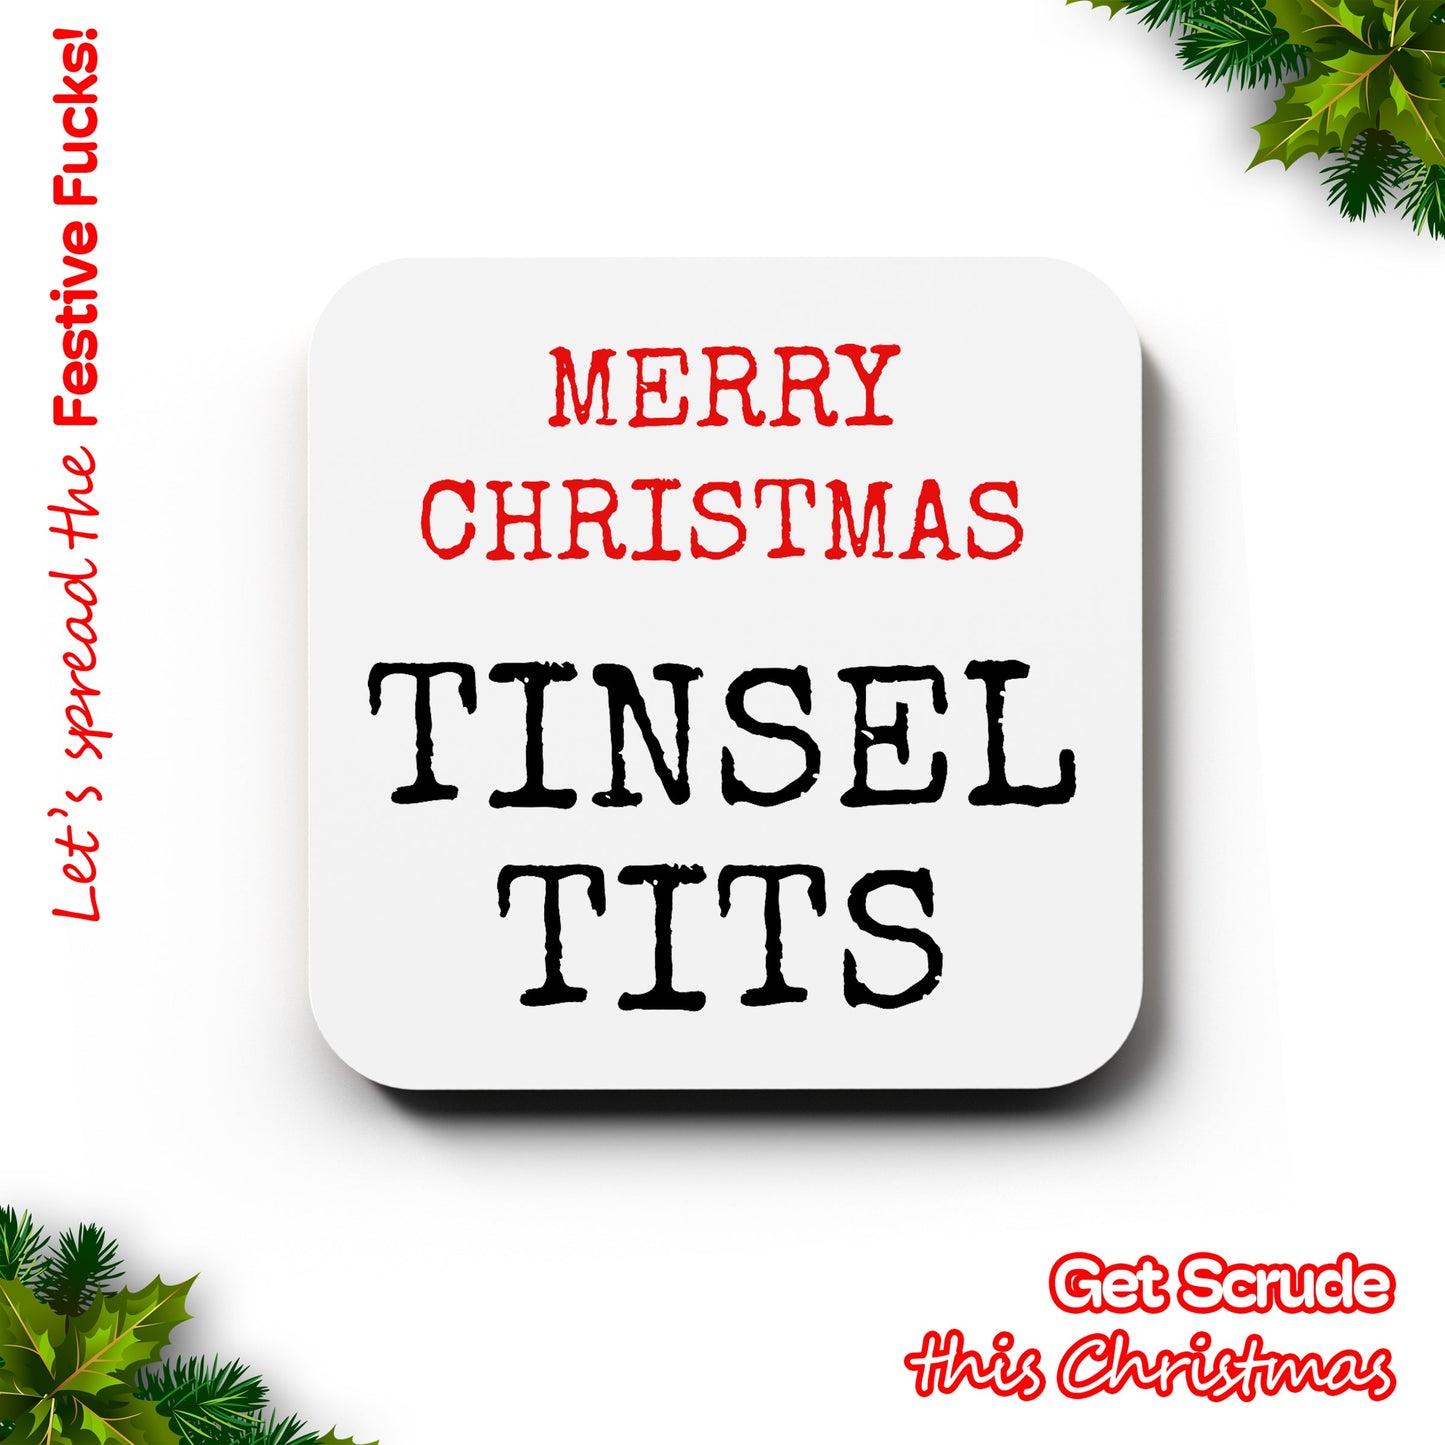 Merry Christmas Tinsel Tits